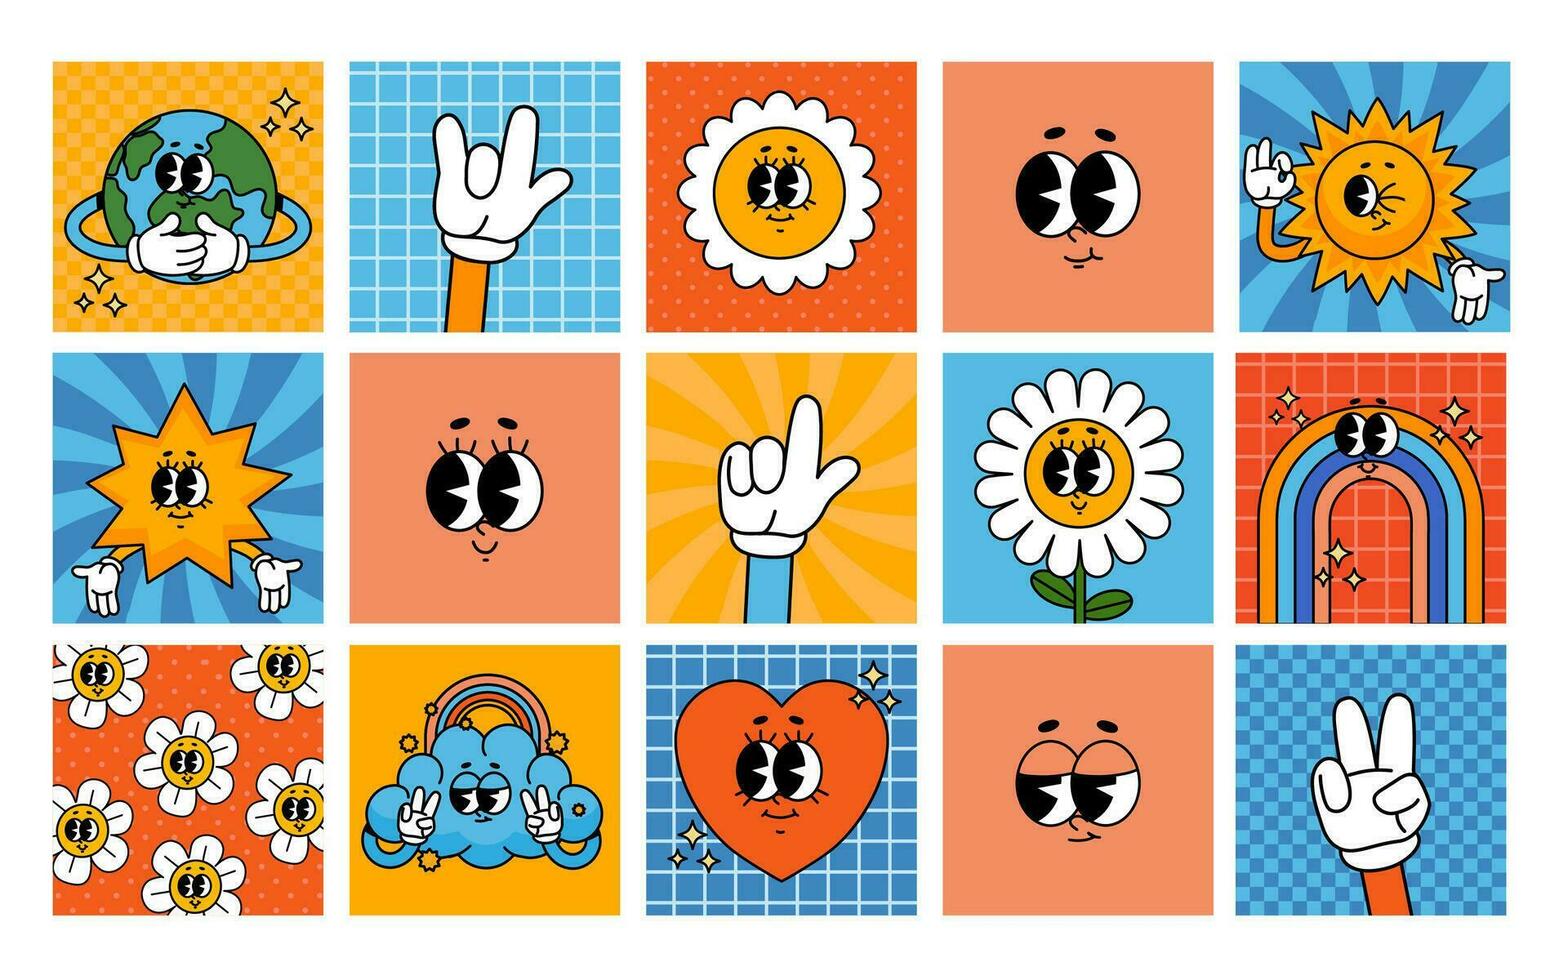 dibujos animados maravilloso tarjetas Clásico 70s cómic caracteres en carteles gracioso retro flor, margarita, corazón, arcoíris, manos y de moda elementos. psicodélico pegatina vector conjunto